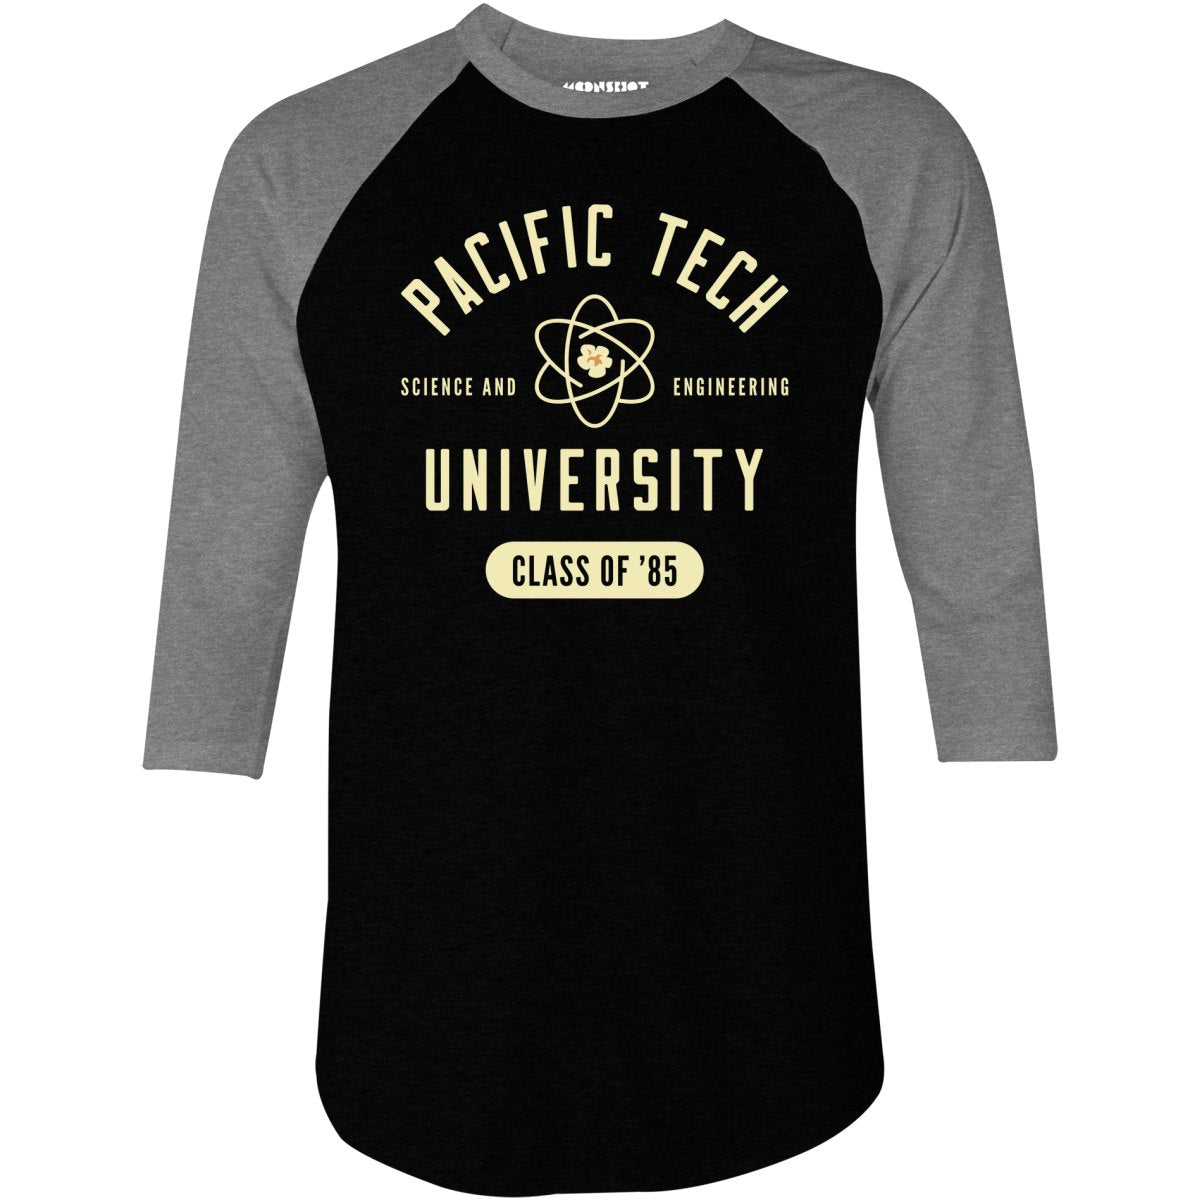 Real Genius - Pacific Tech University - 3/4 Sleeve Raglan T-Shirt